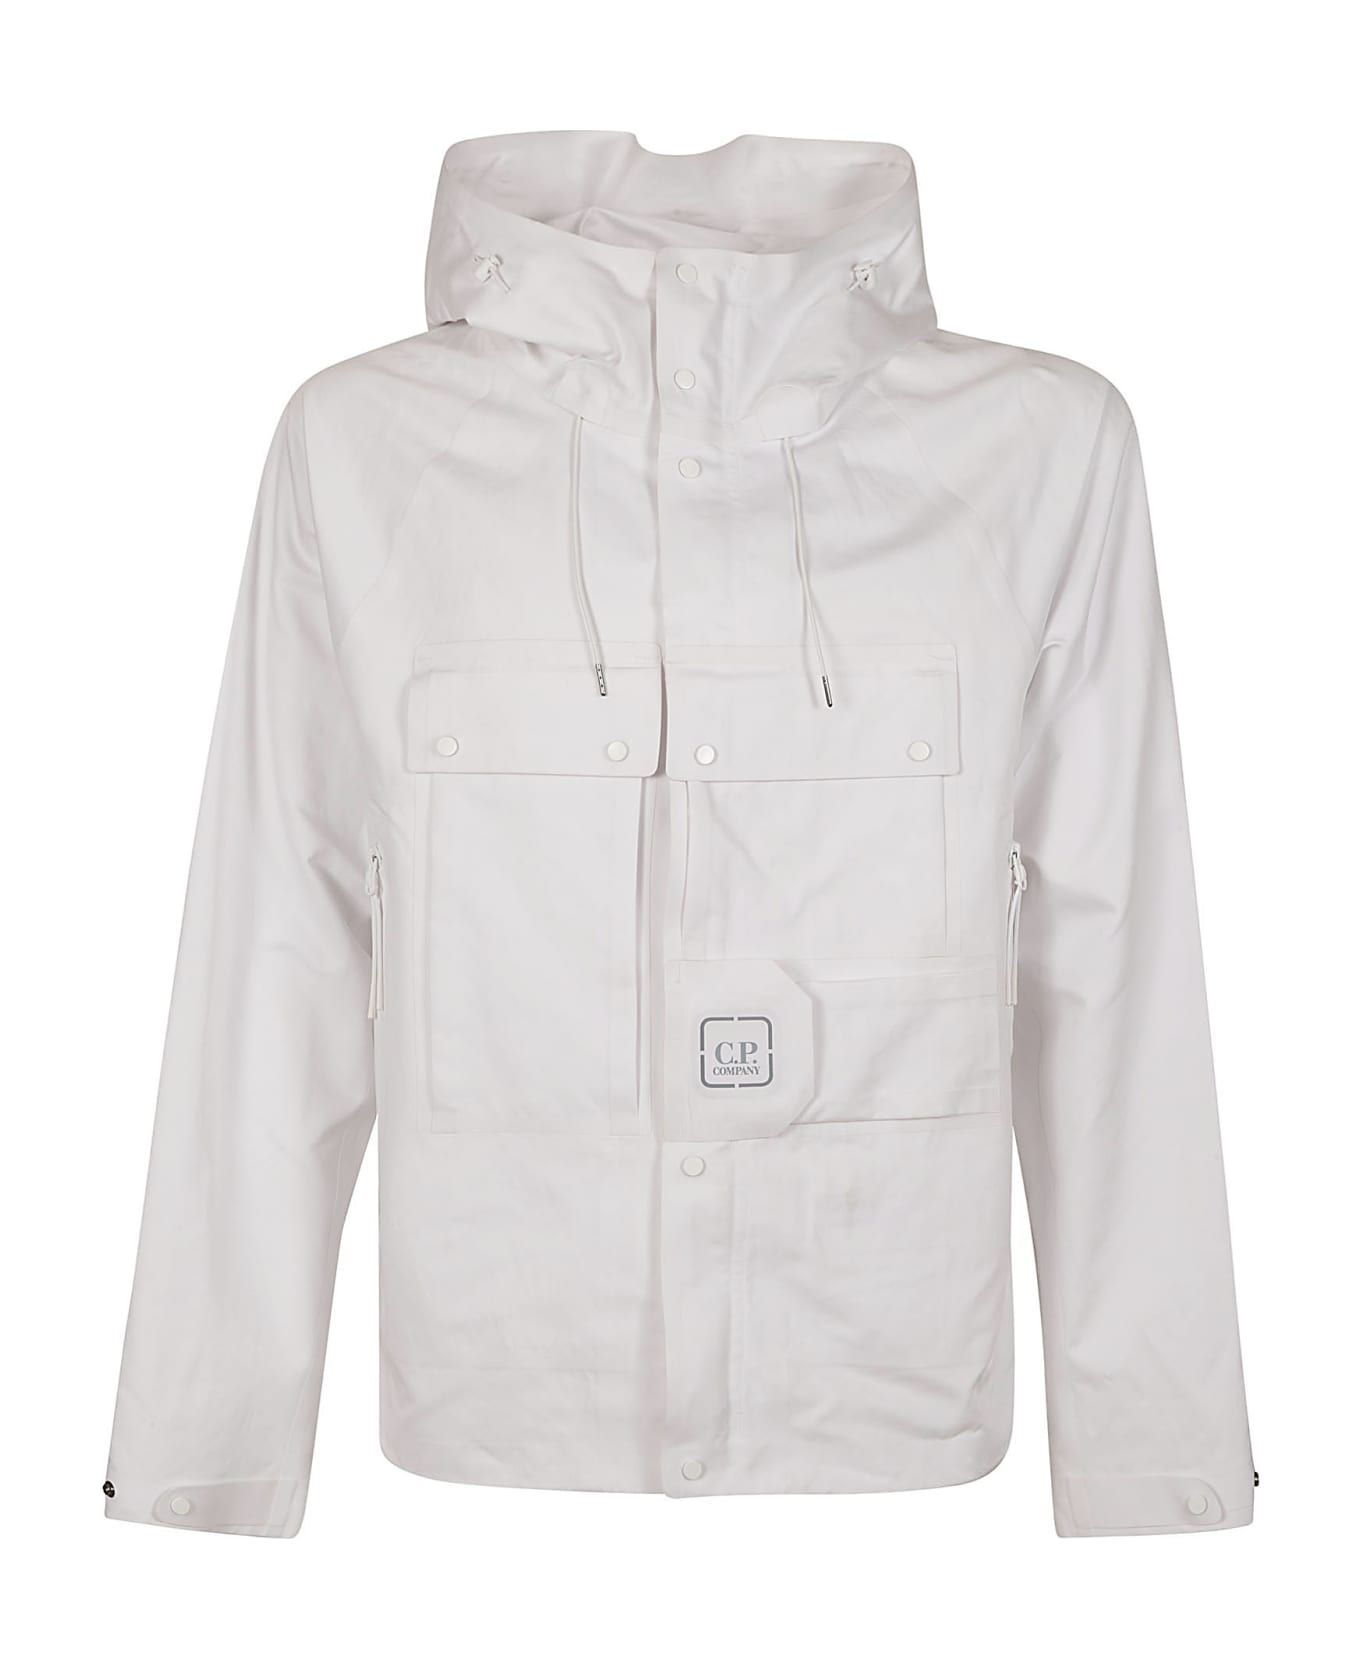 C.P. Company Hyst Medium Jacket - white